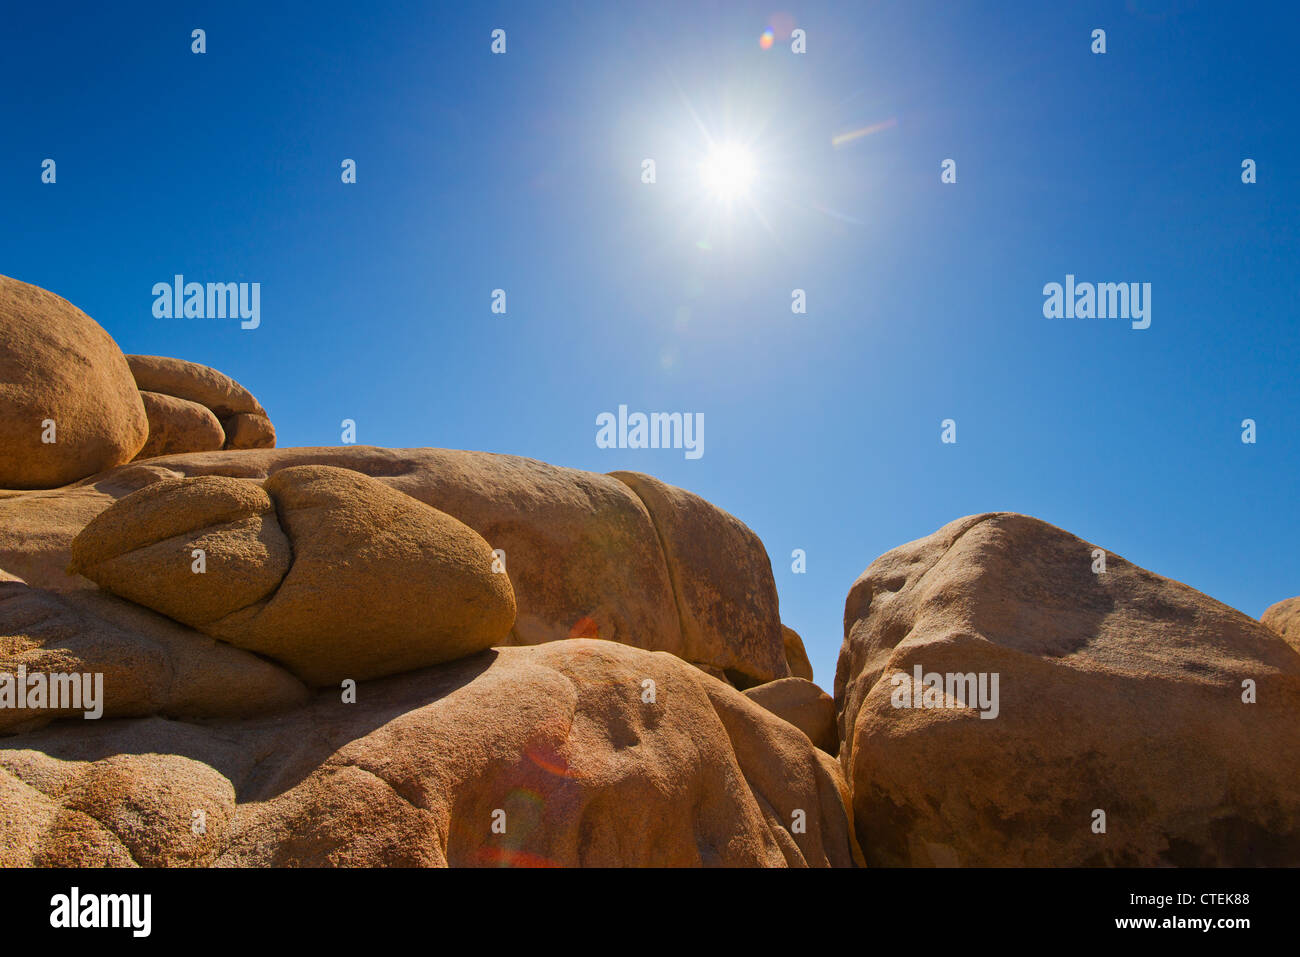 USA, California, Joshua Tree National Park, Desert rocks with solar flare Stock Photo